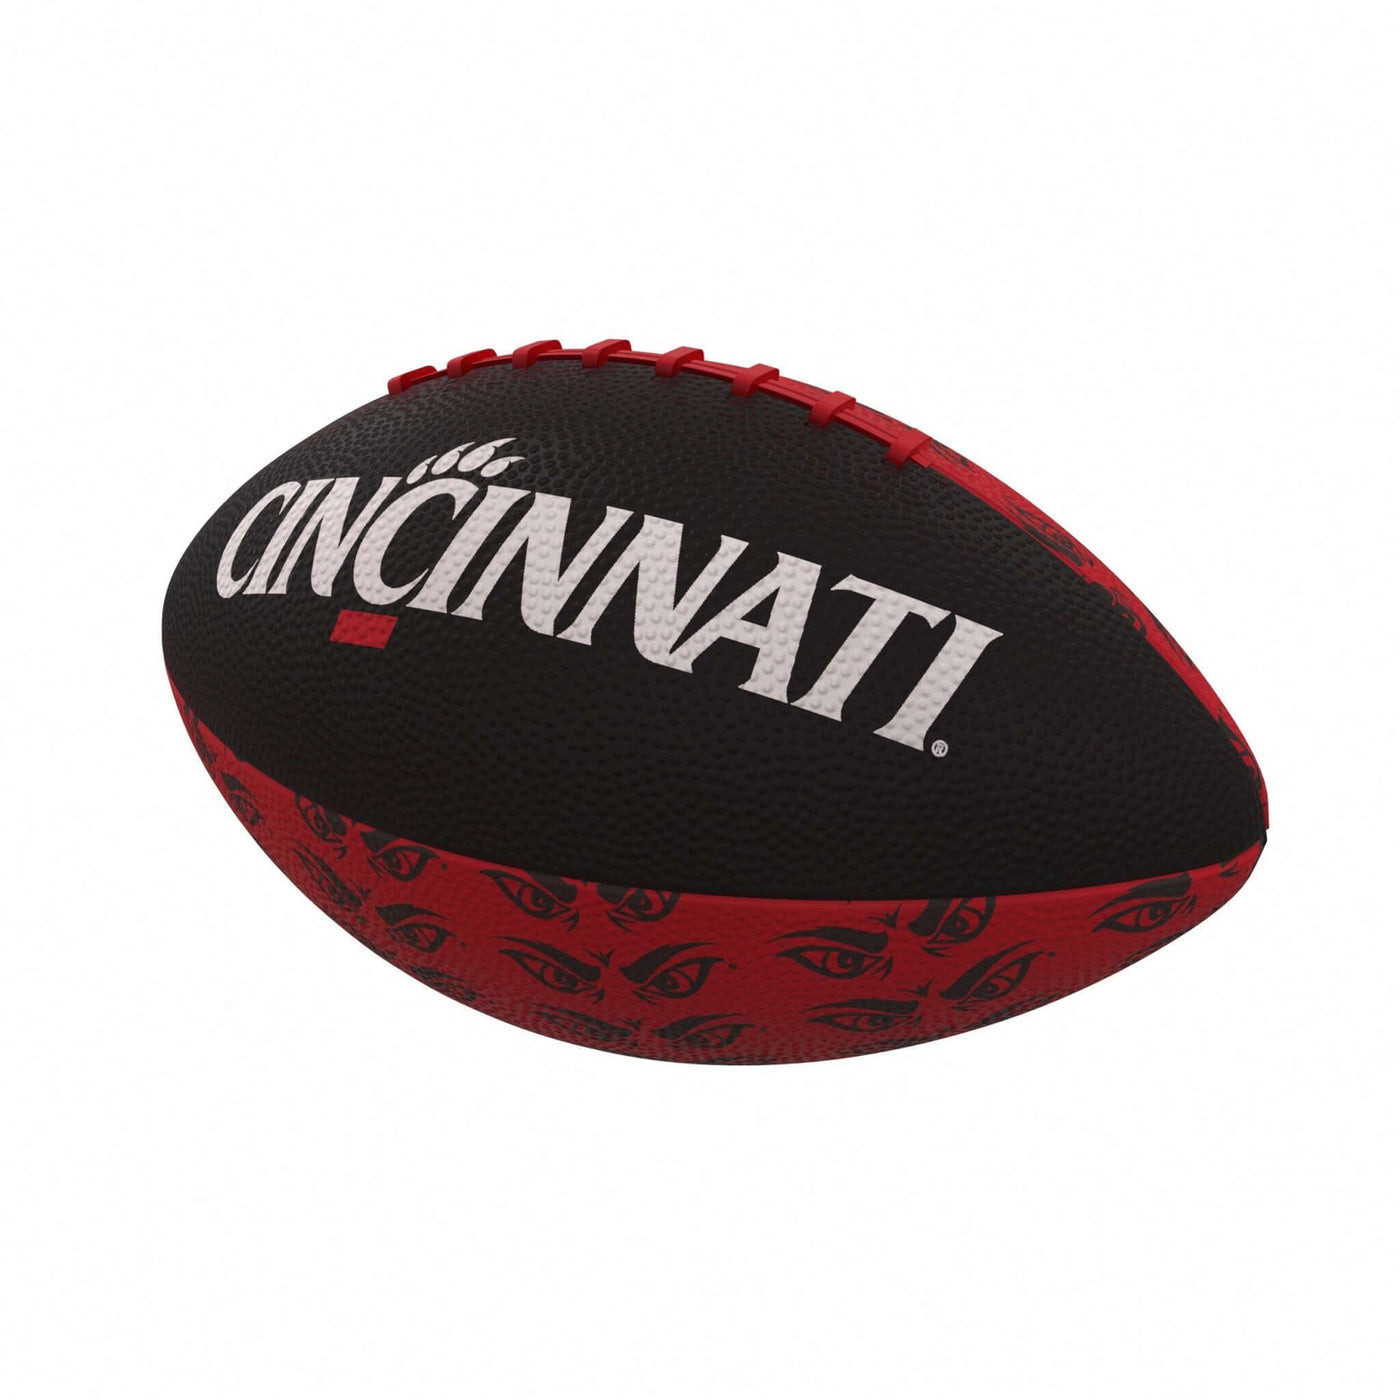 Cincinnati Repeating Mini-Size Rubber Football - Logo Brands